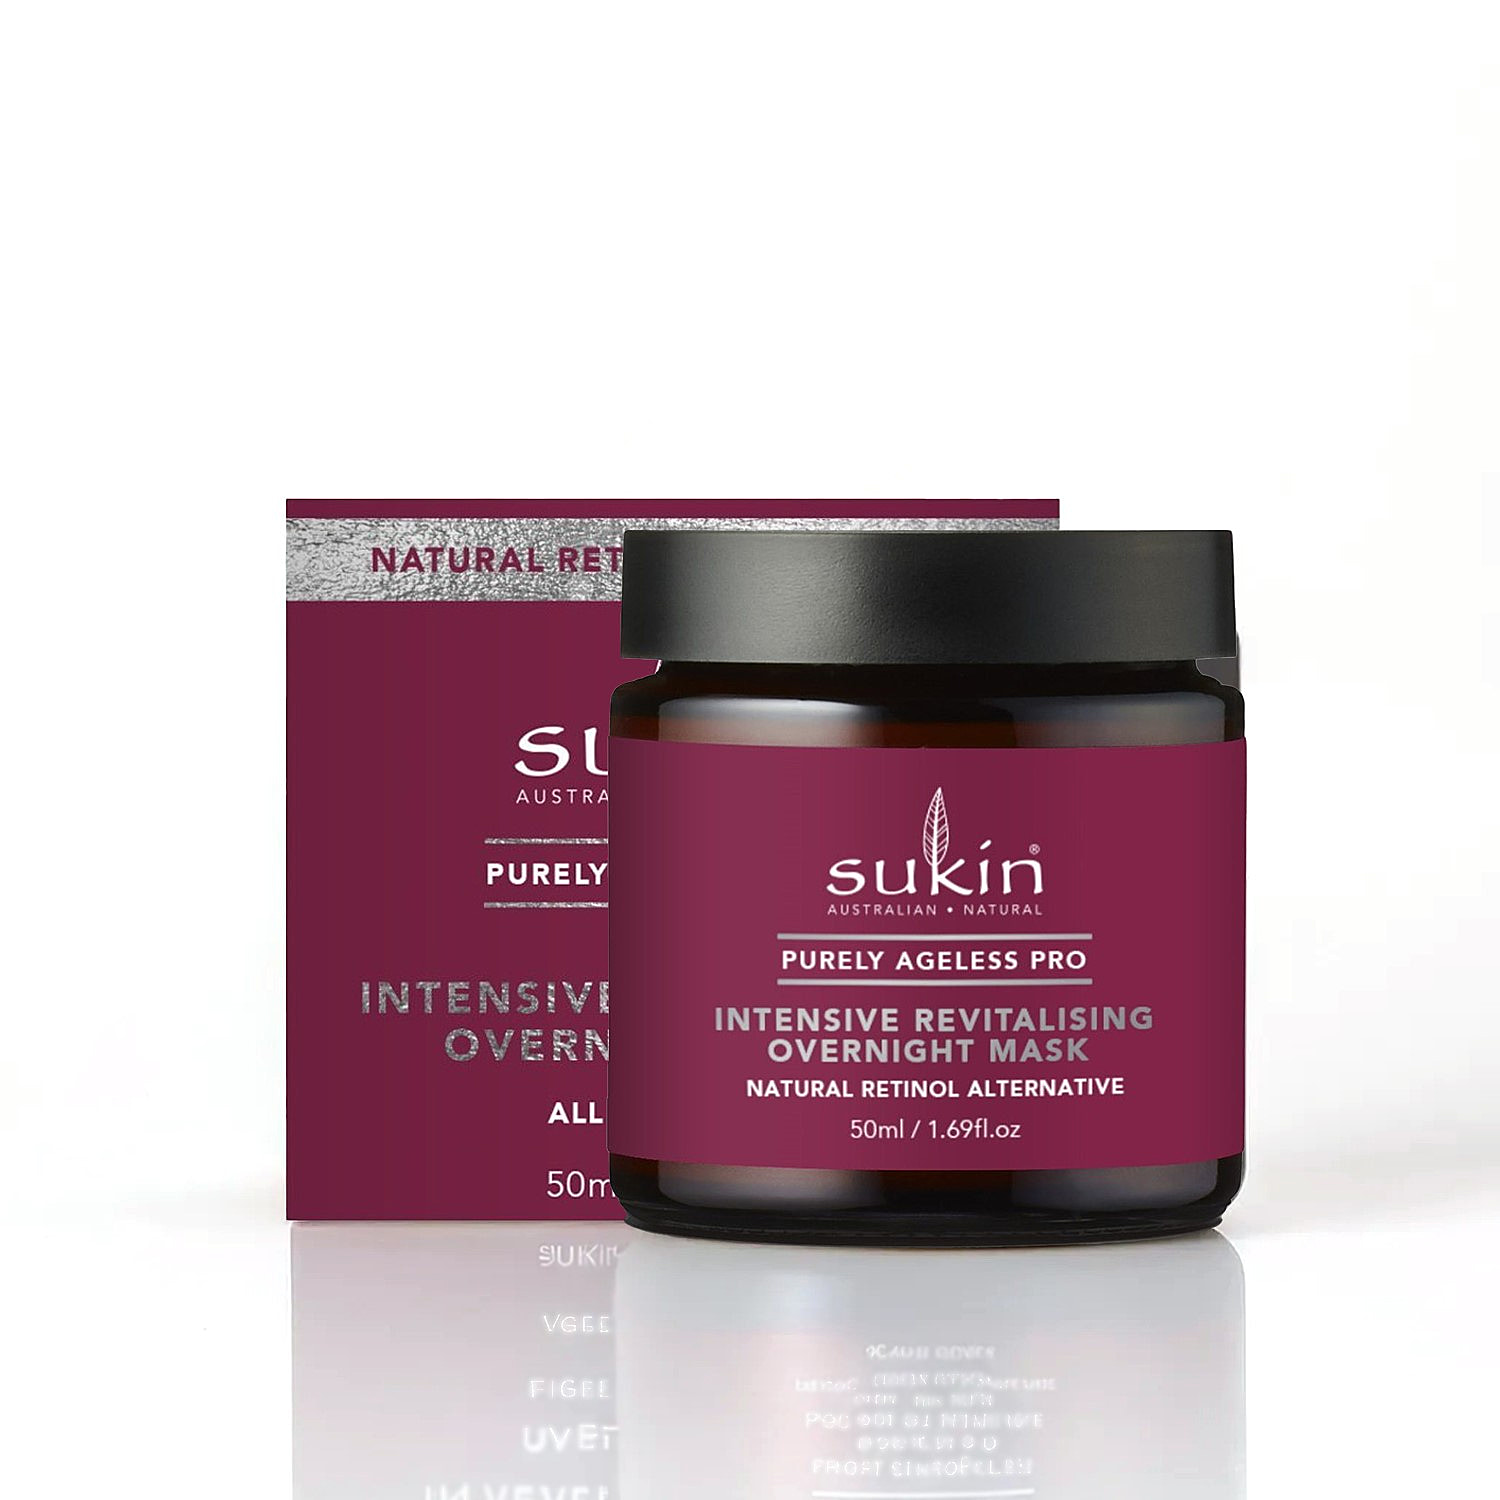 Sukin -Purely Ageless PRO Intensive Revitalising Overnight Mask 50ml